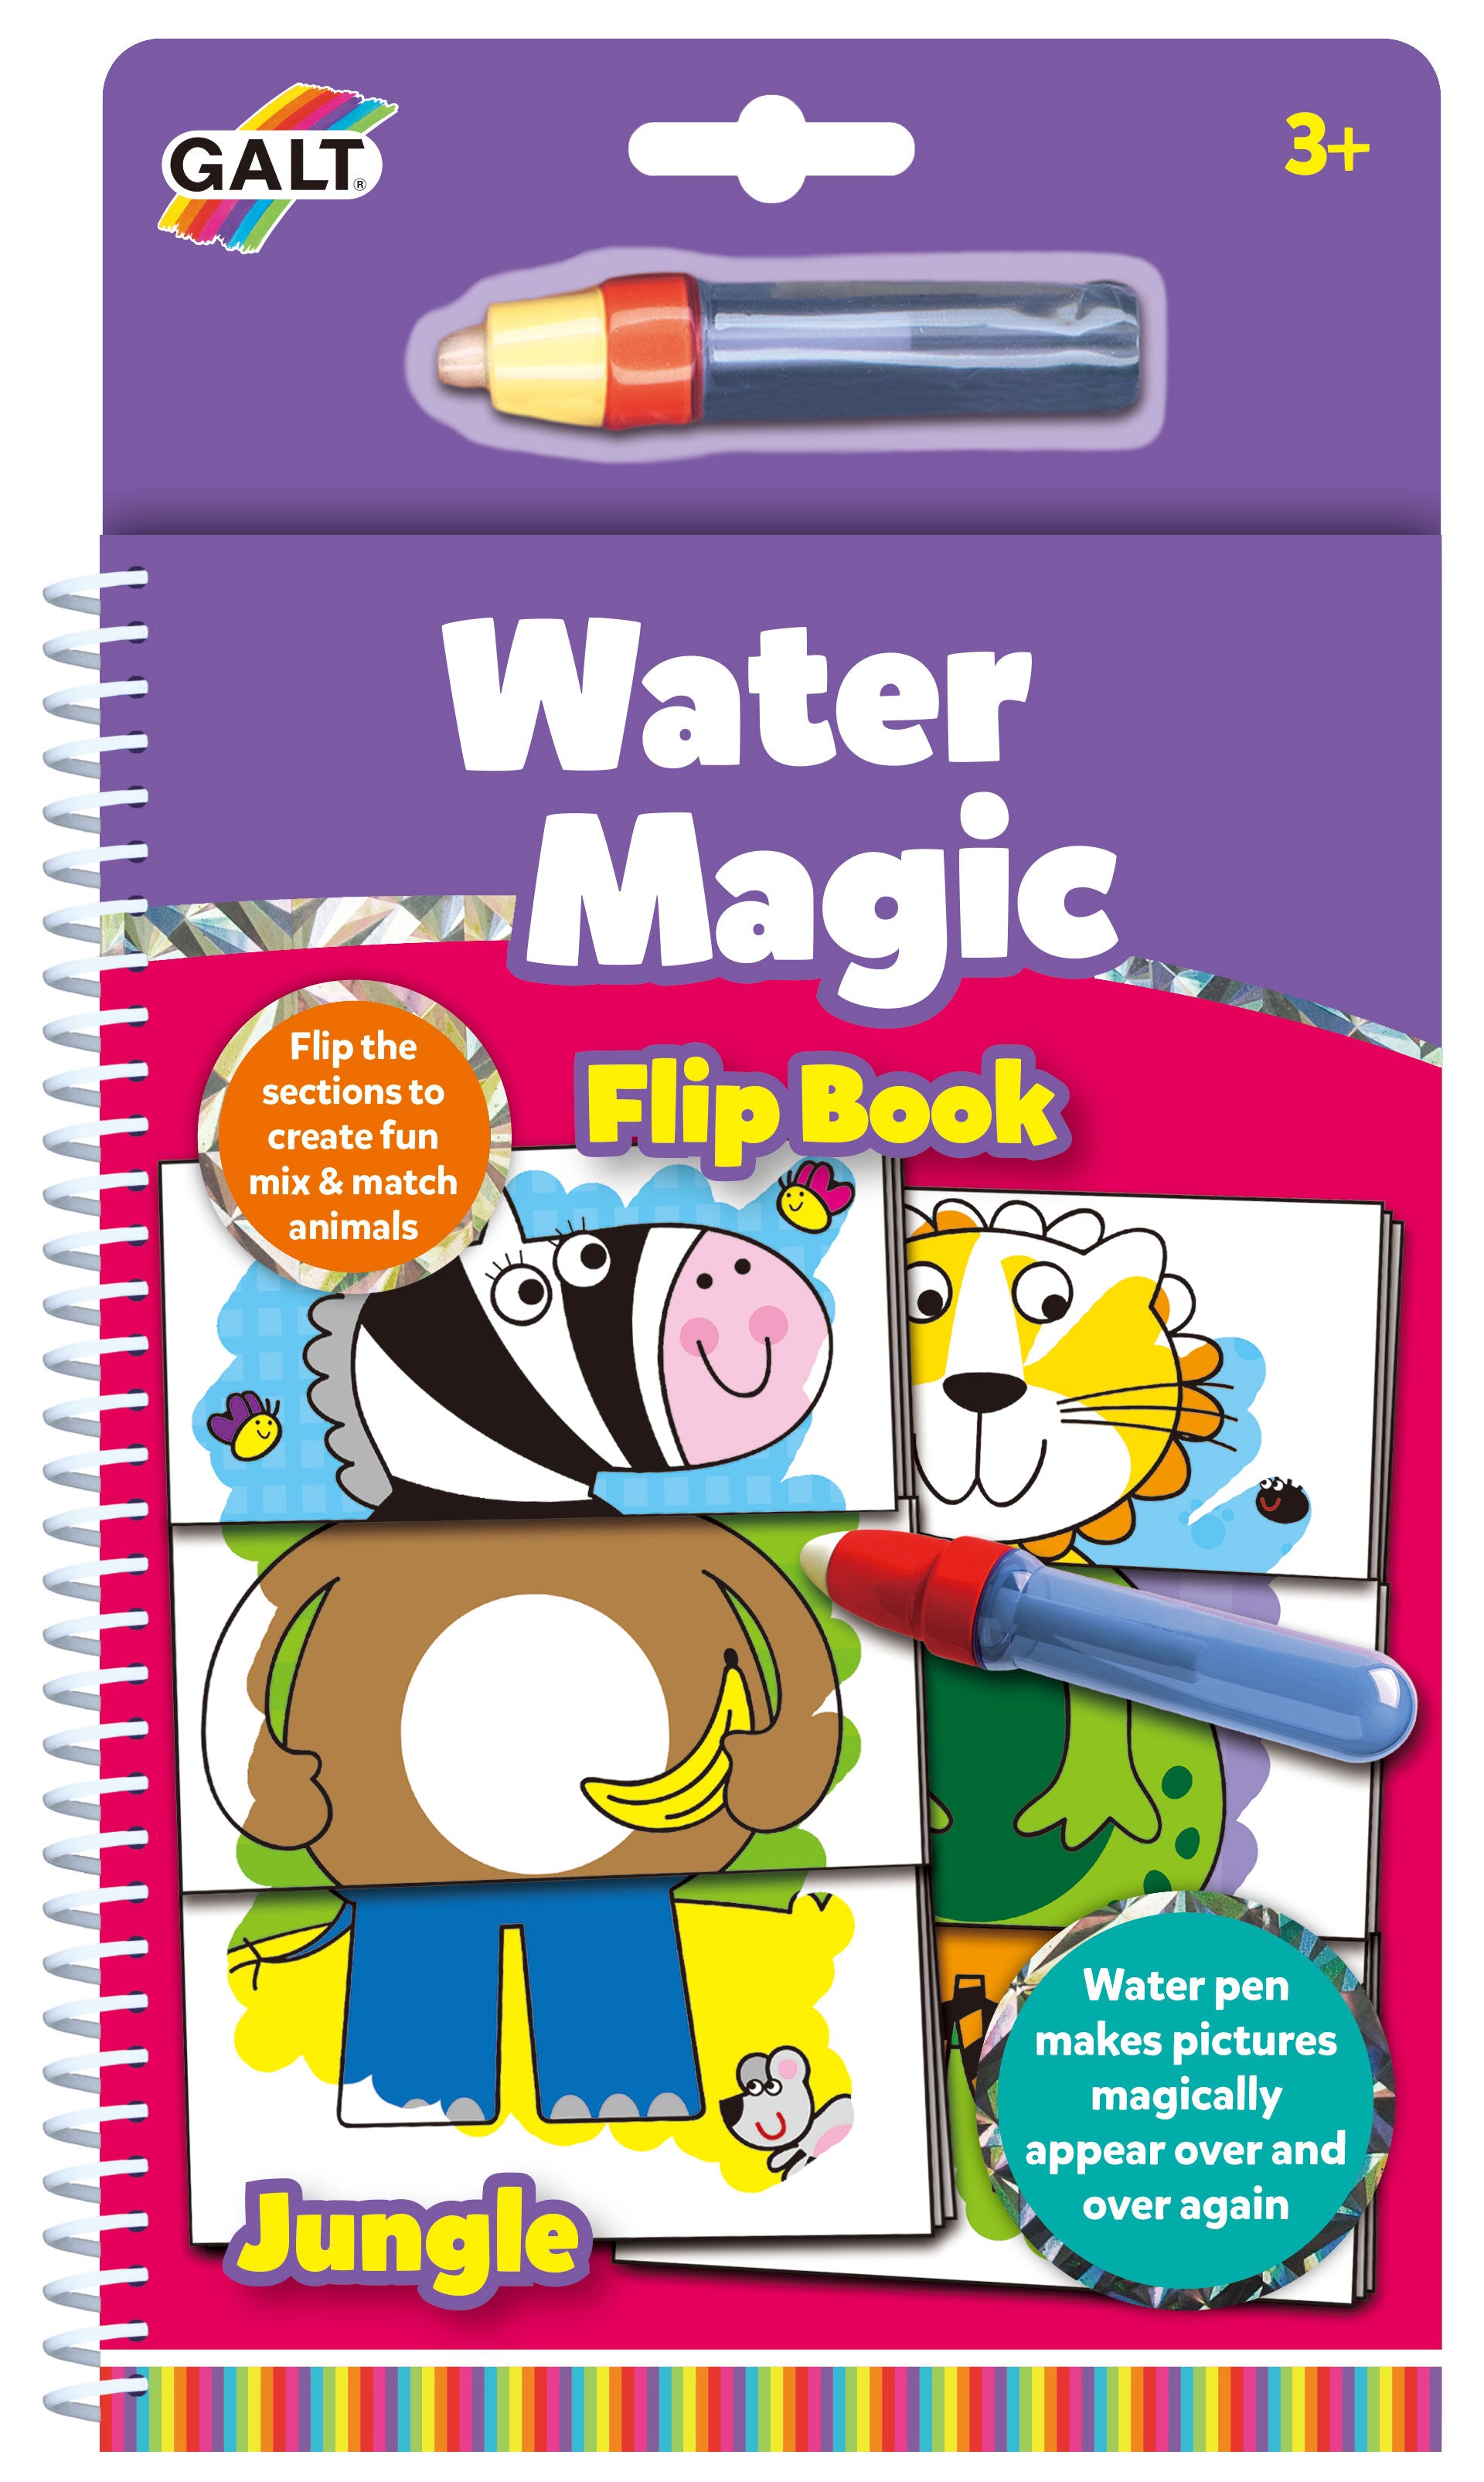 Galt Water Magic Flip Book: Jungle